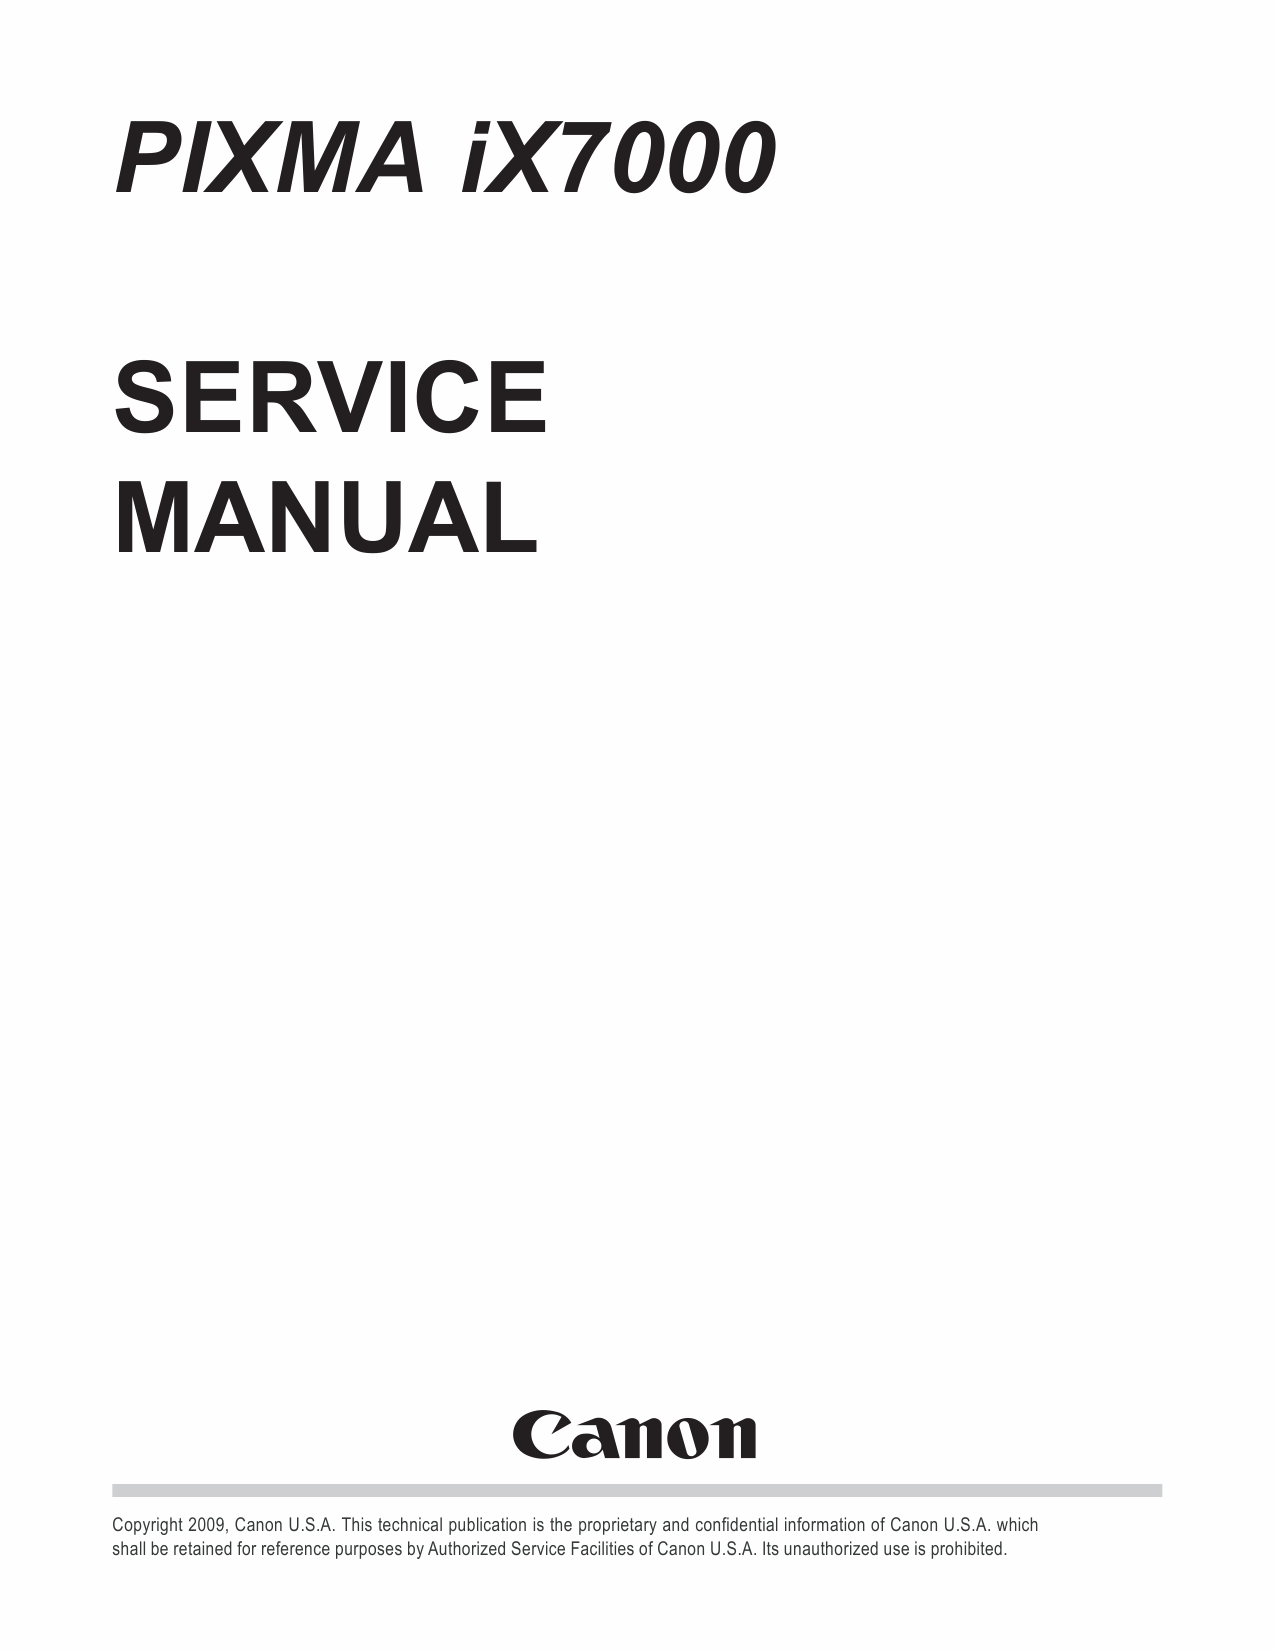 Canon PIXMA iX7000 Service Manual-1